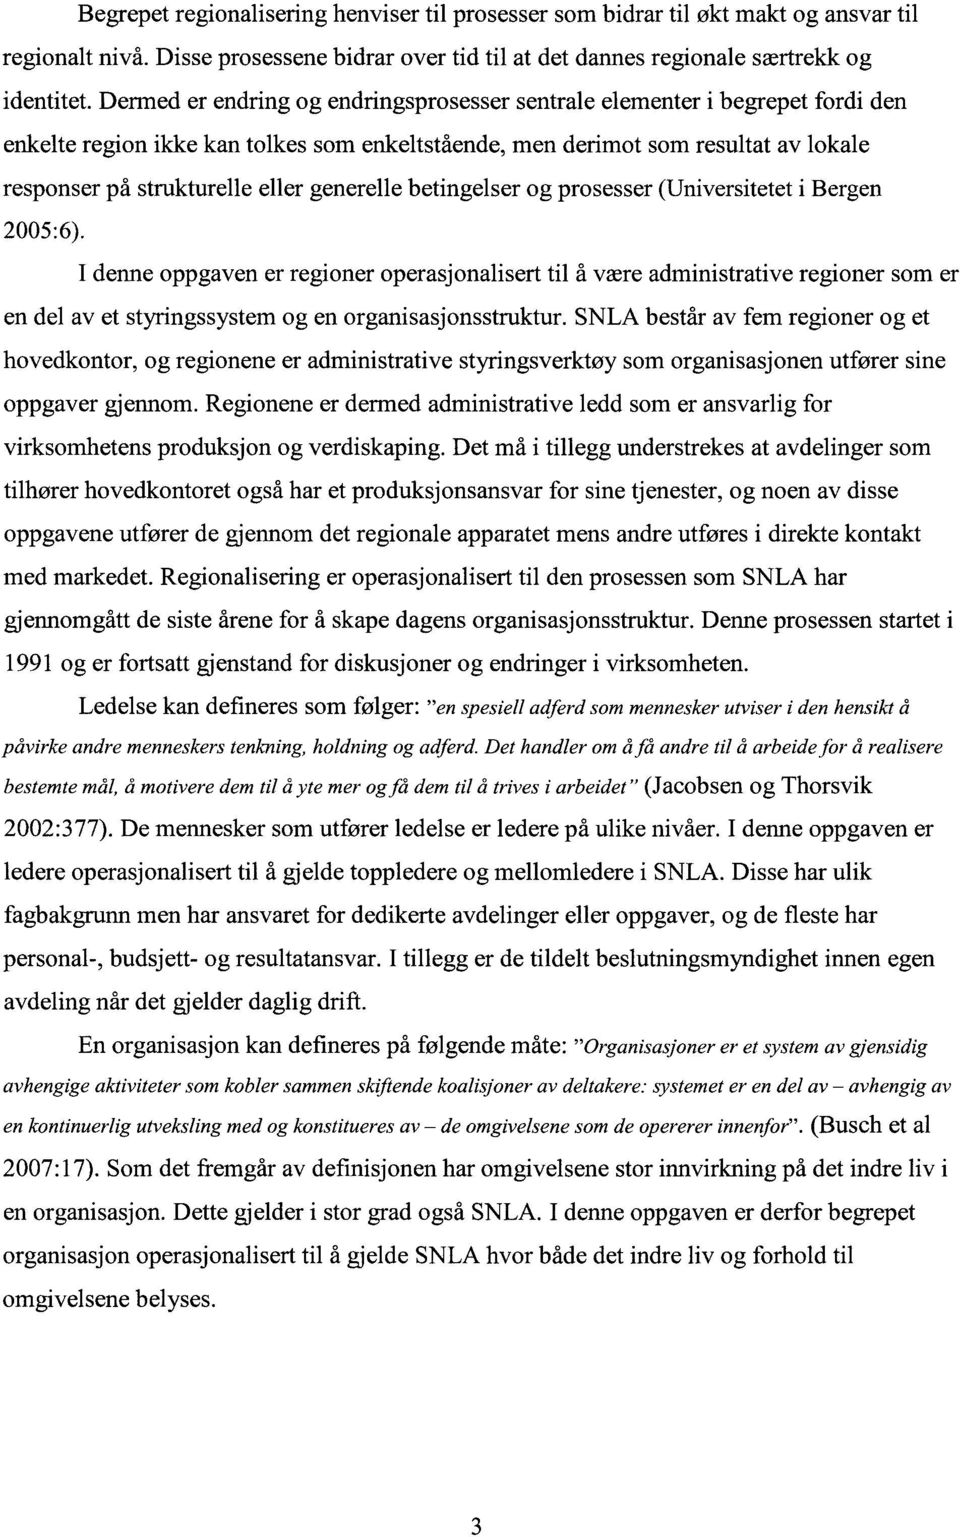 generelle betingelser og prosesser (Universitetet i Bergen 2005:6).